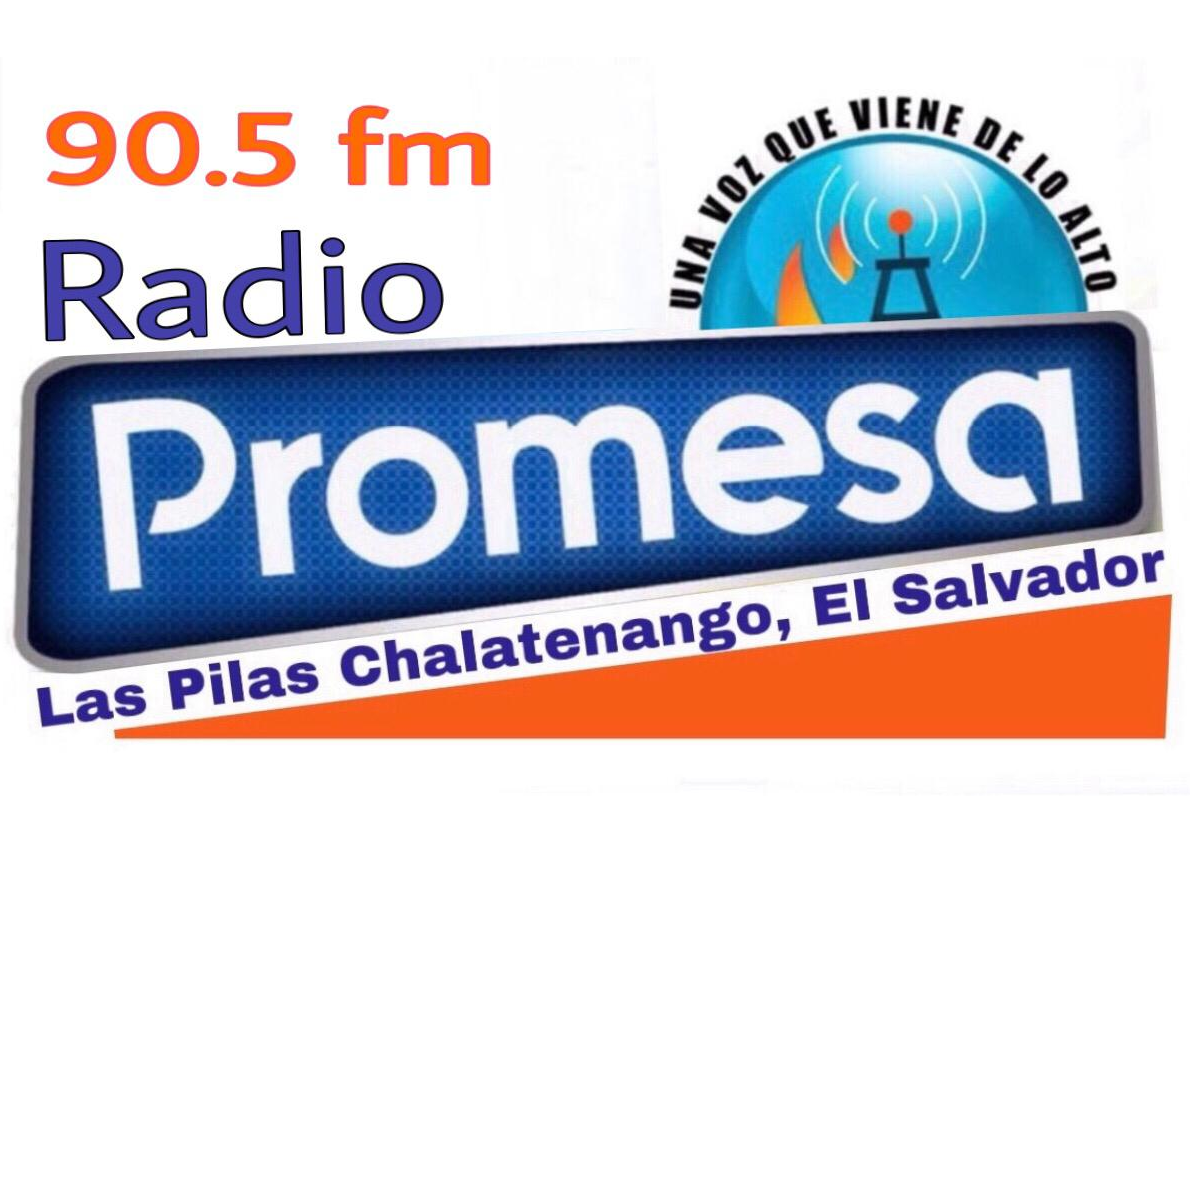 Radio Promesa